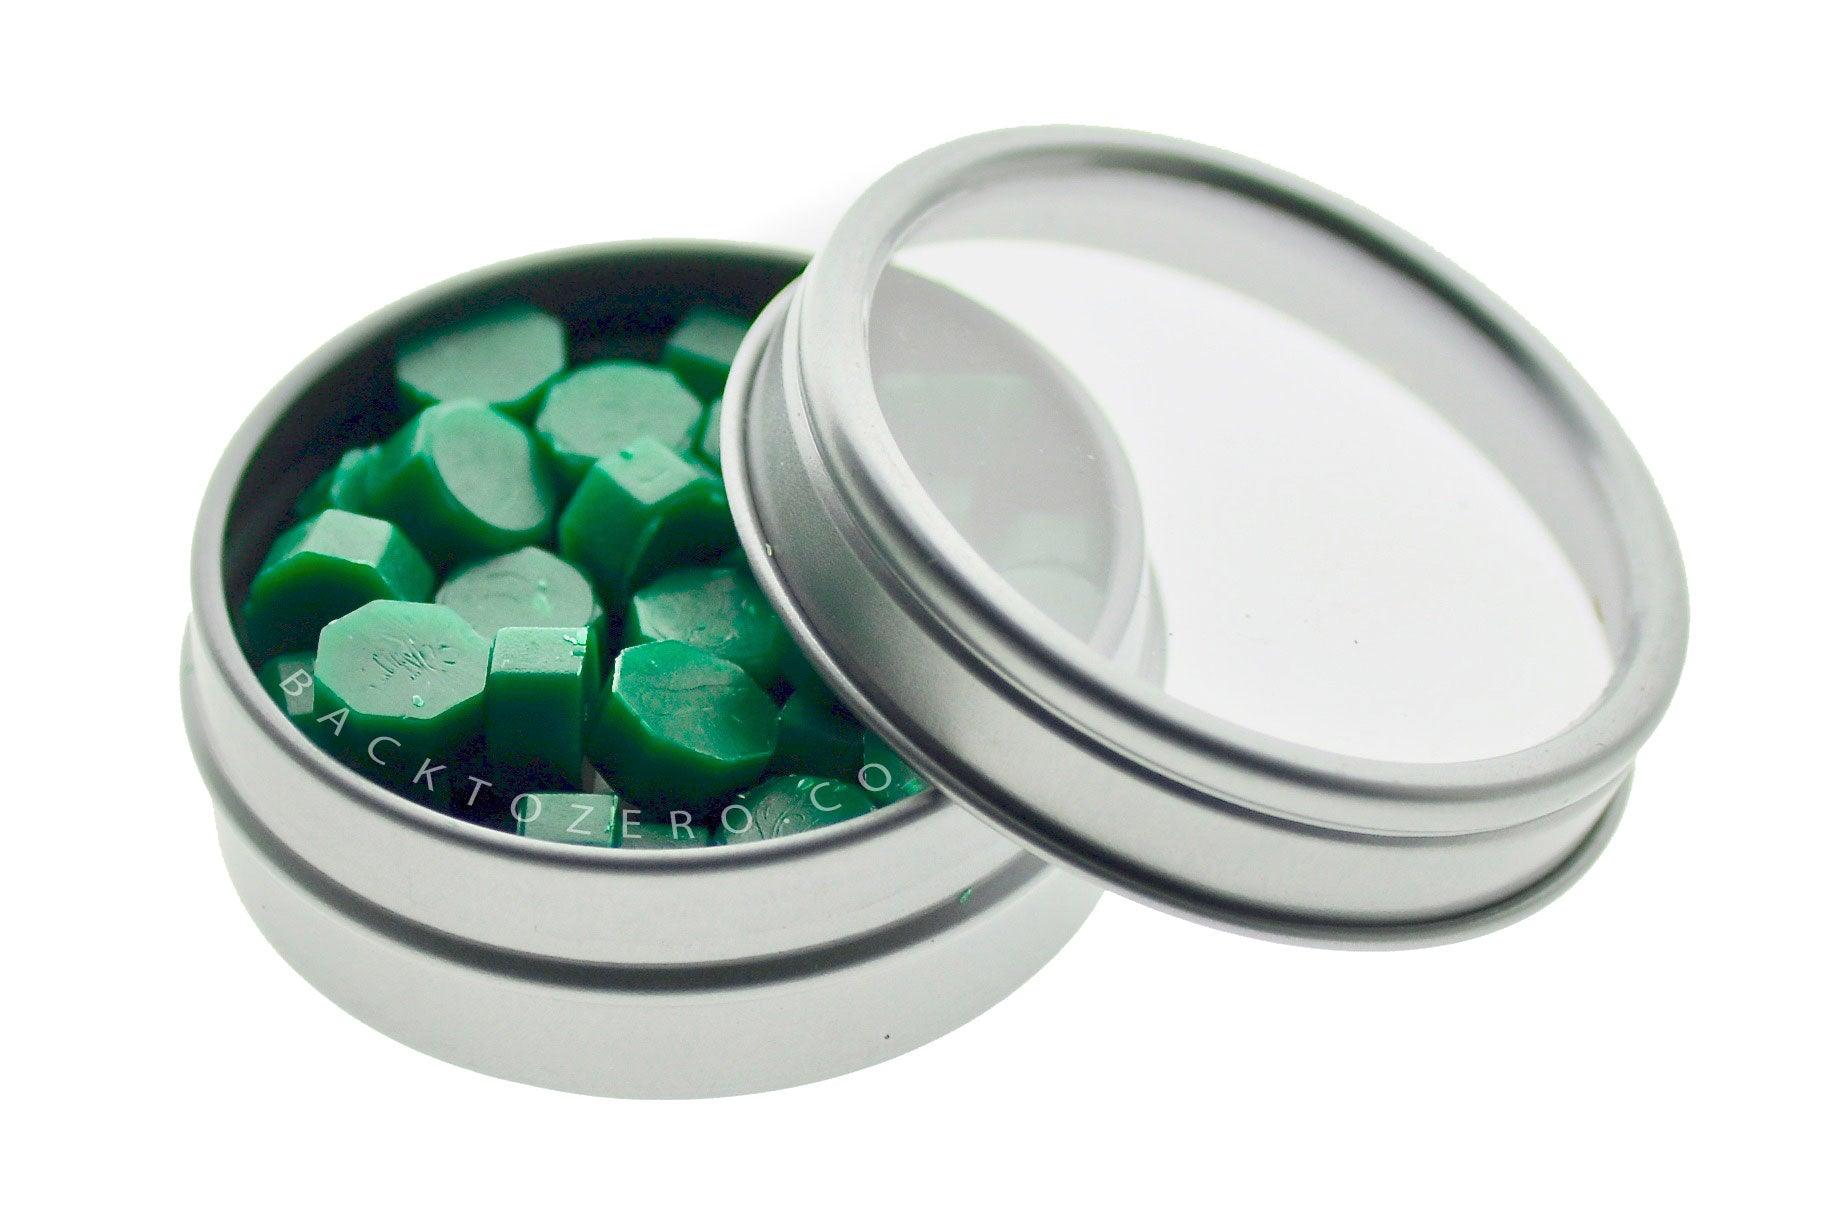 Emerald Octagon Sealing Wax Beads - Backtozero B20 - green, octagon bead, sealing wax, tin, Wax Beads